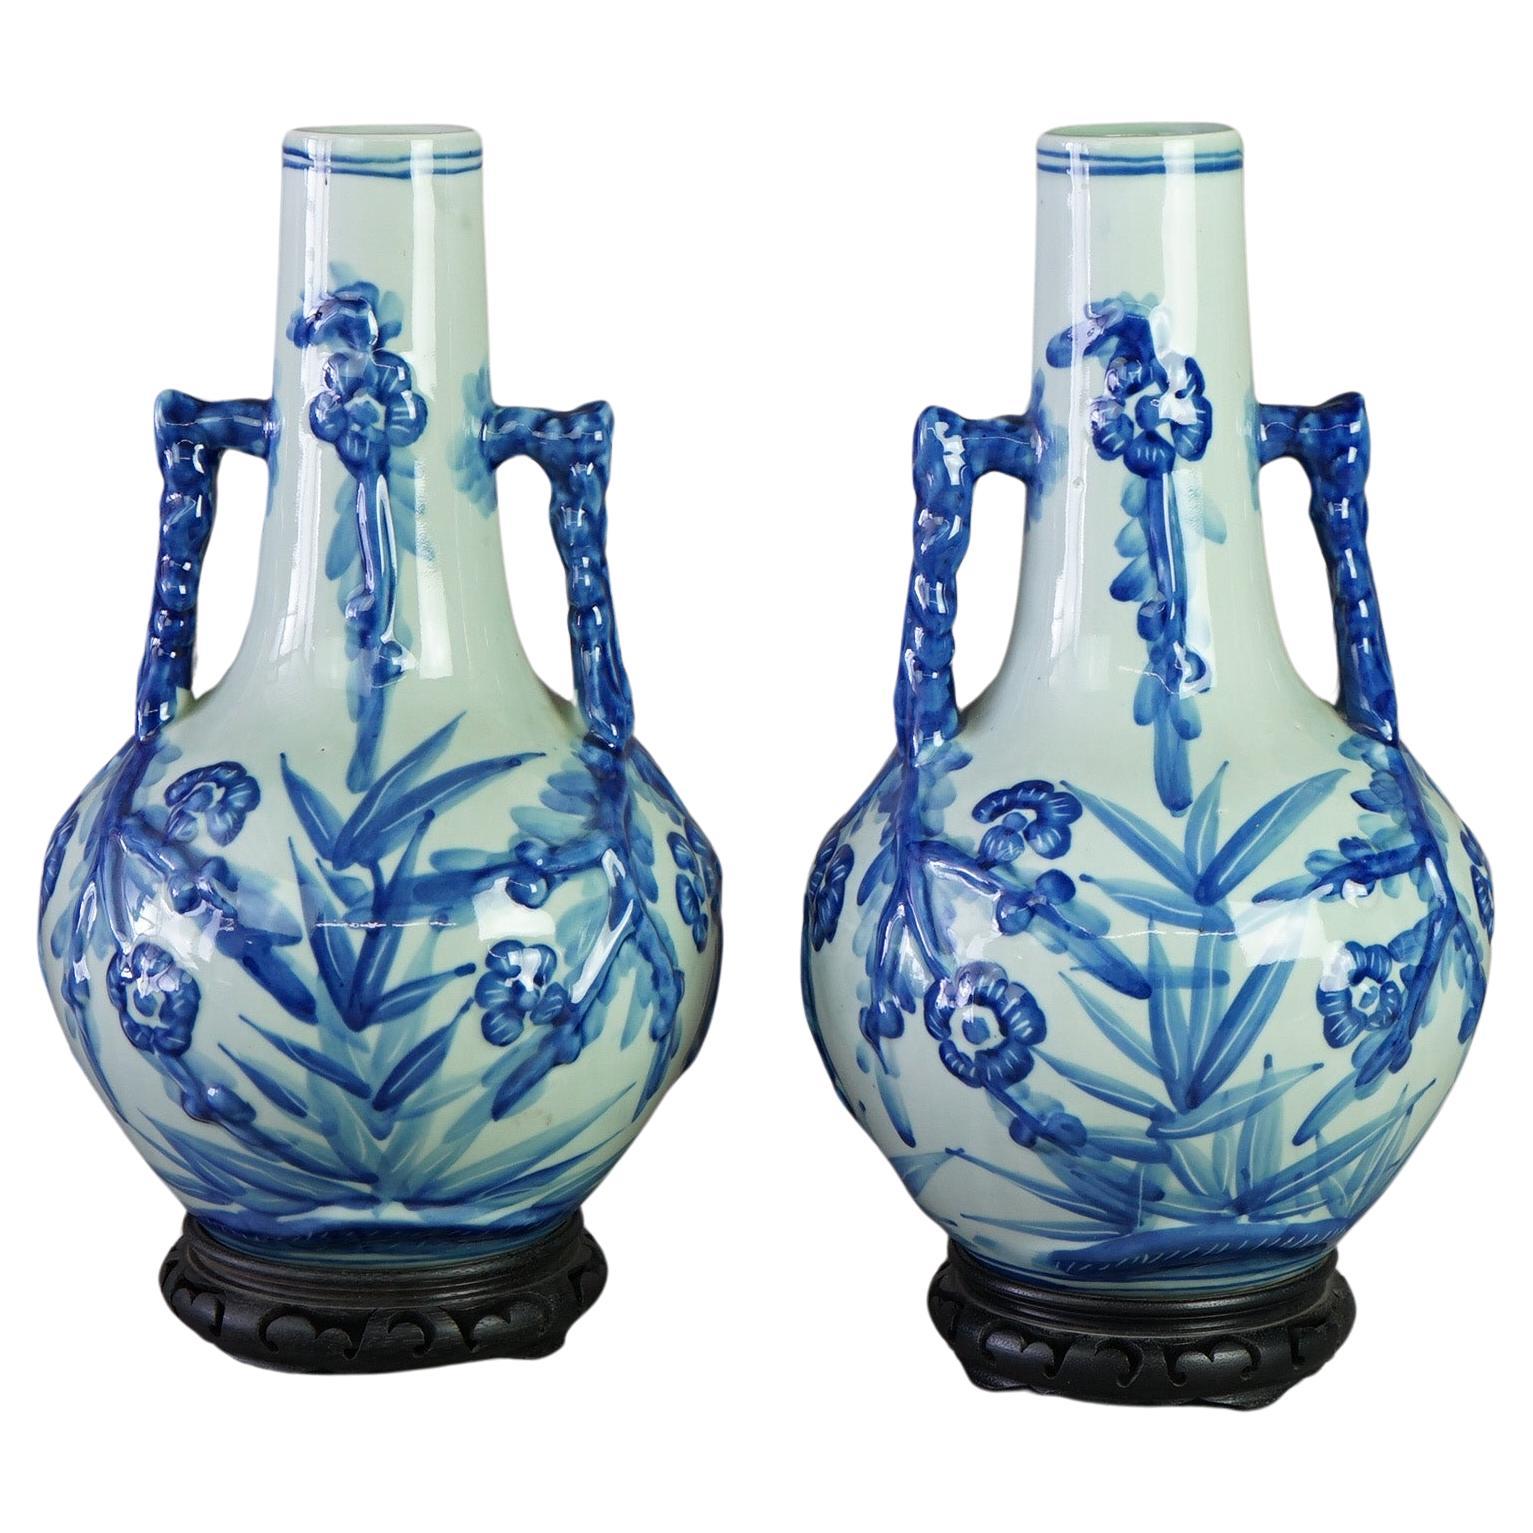 Pair Chinese Canton Style Porcelain Blue Glazed Bottle Vases 20th C